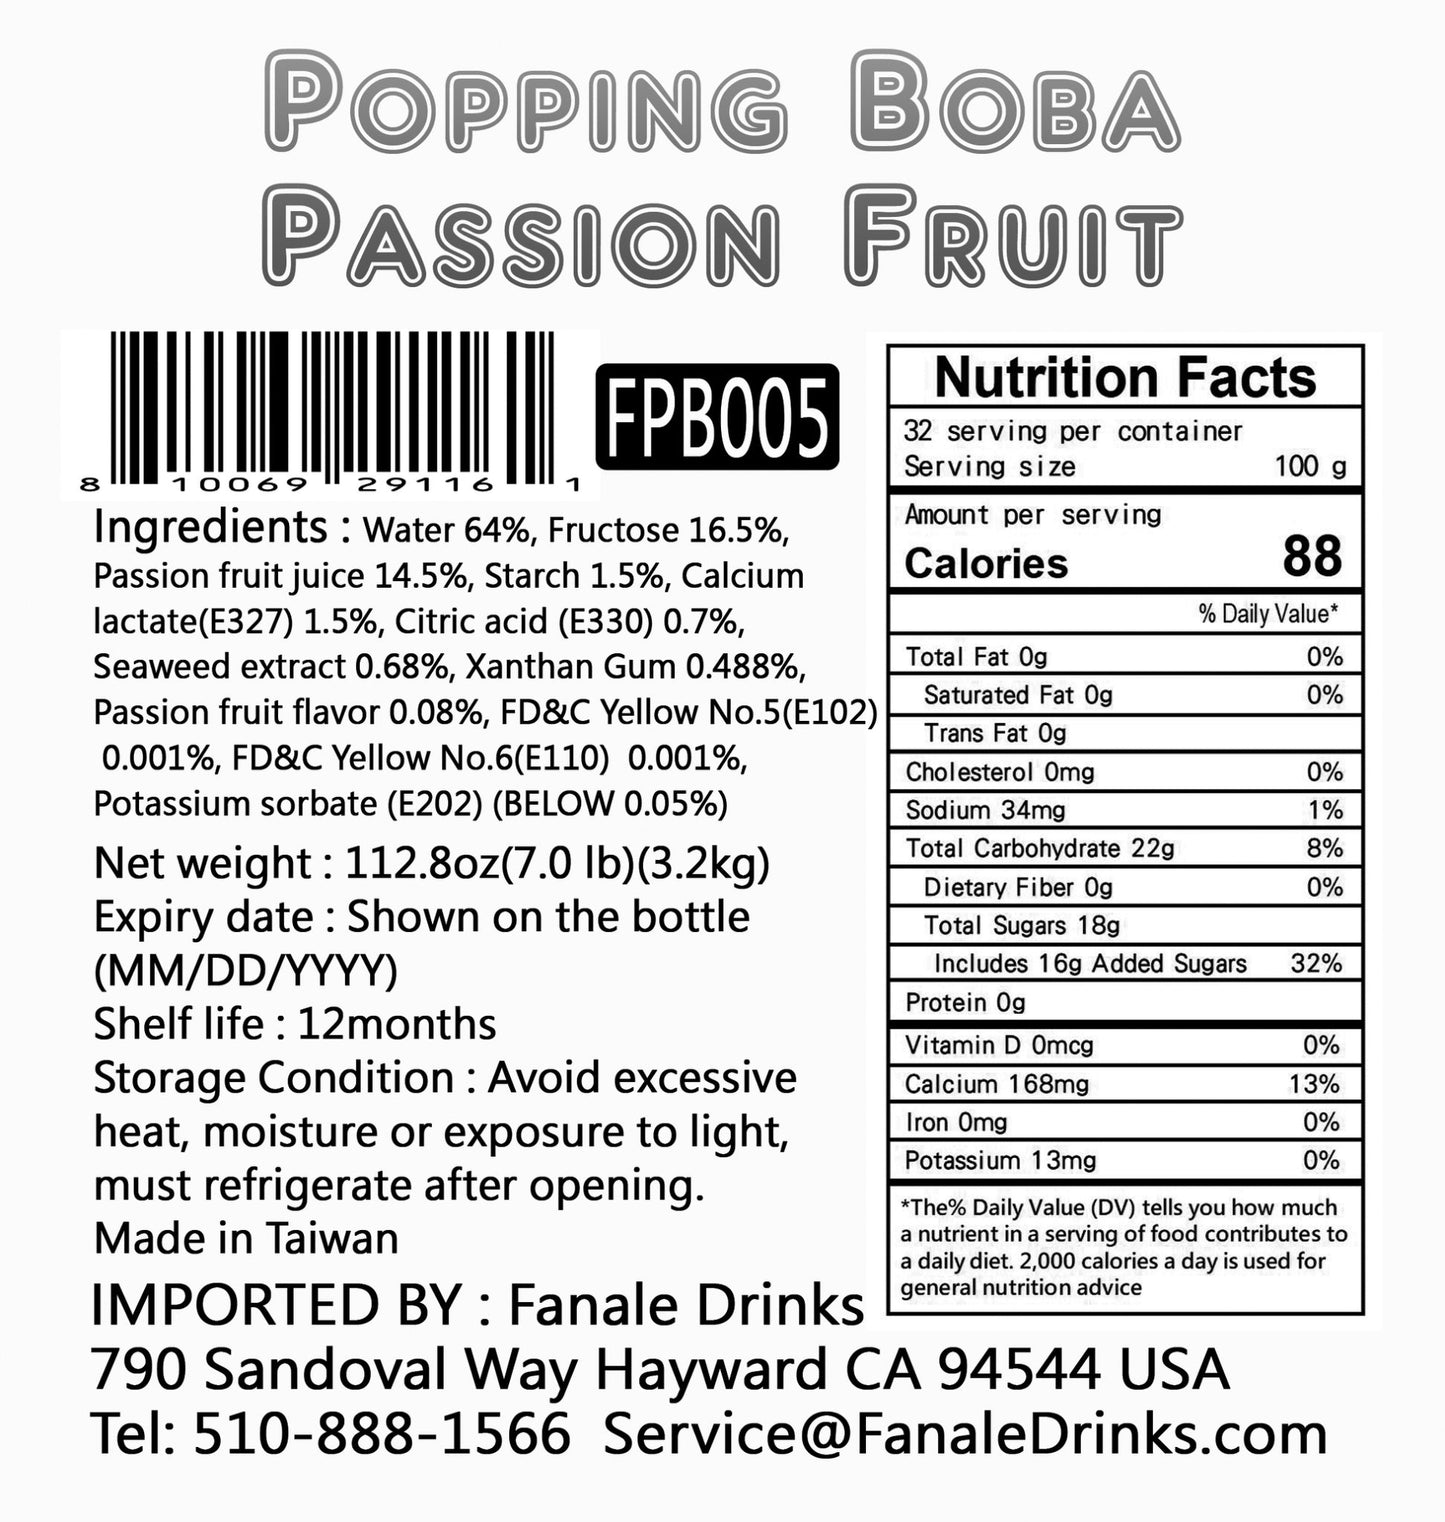 Popping Bursting Boba Juice Ball - Passion Fruit Flavor